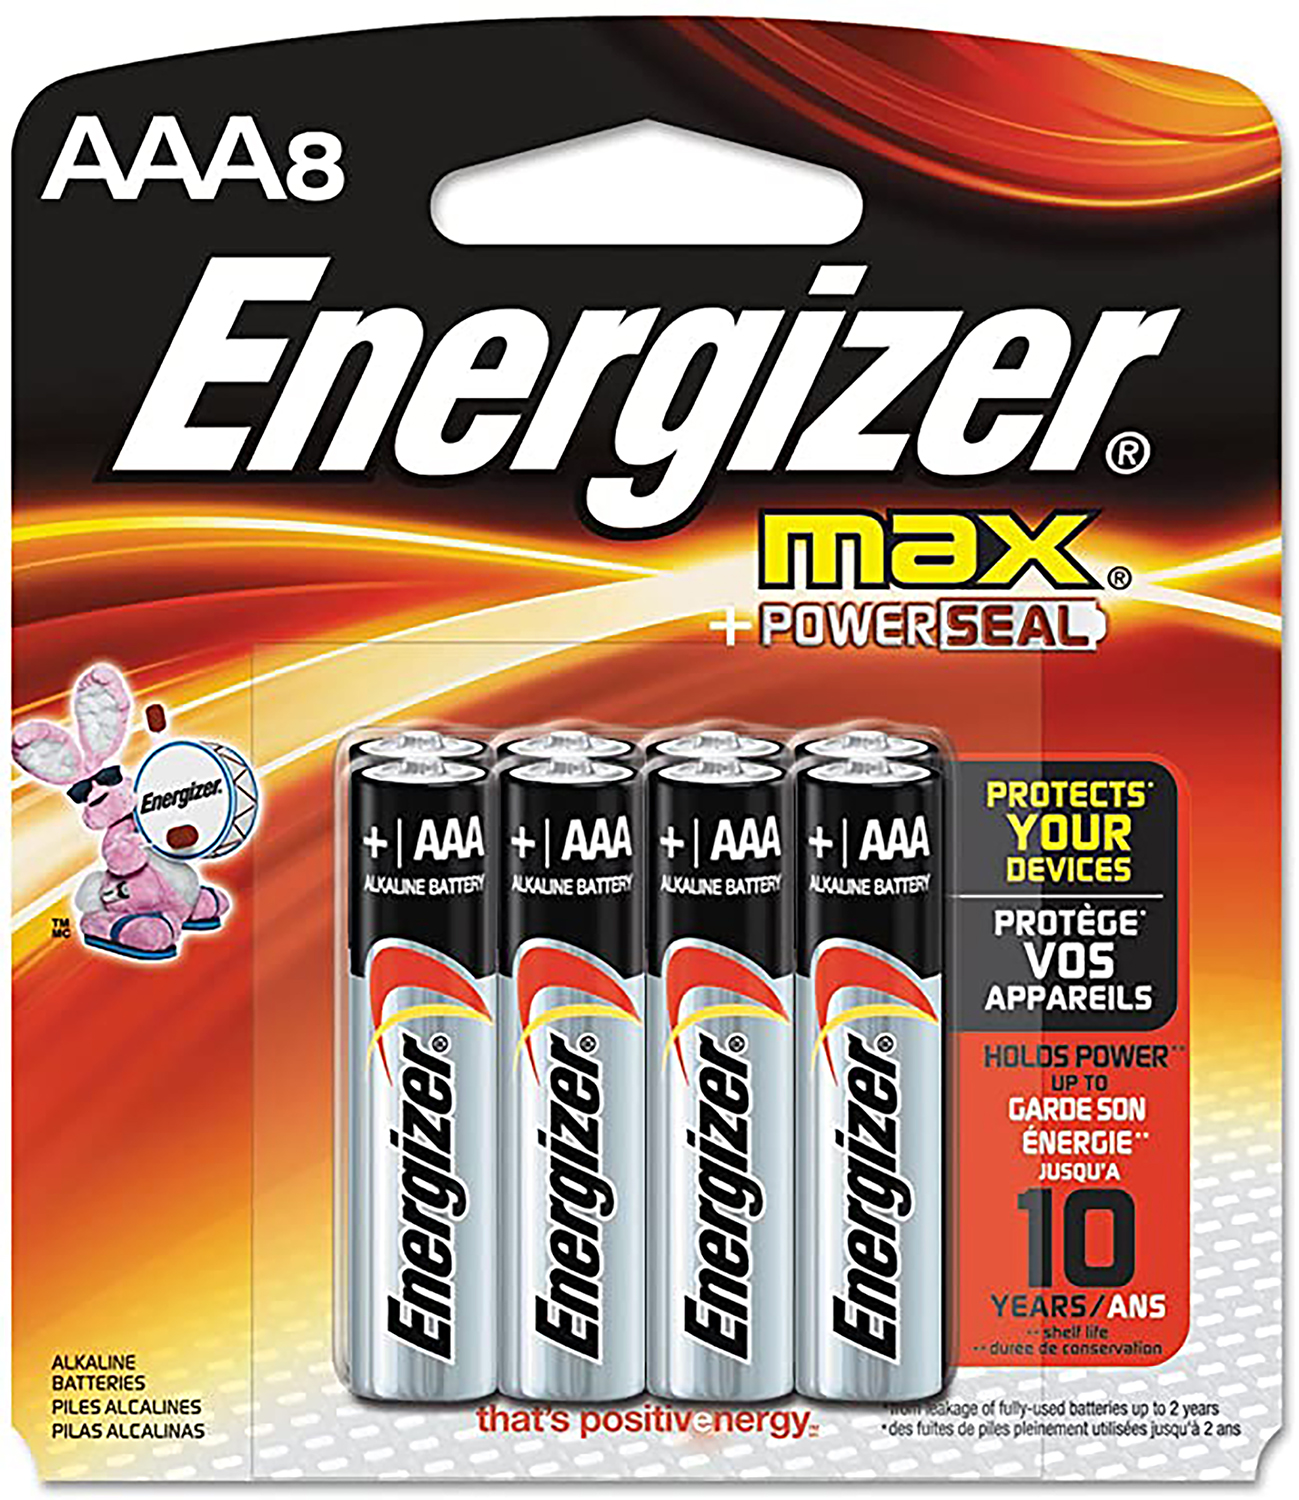 Energizer E92MP-8 AAA Max 1.5 volts Alkaline